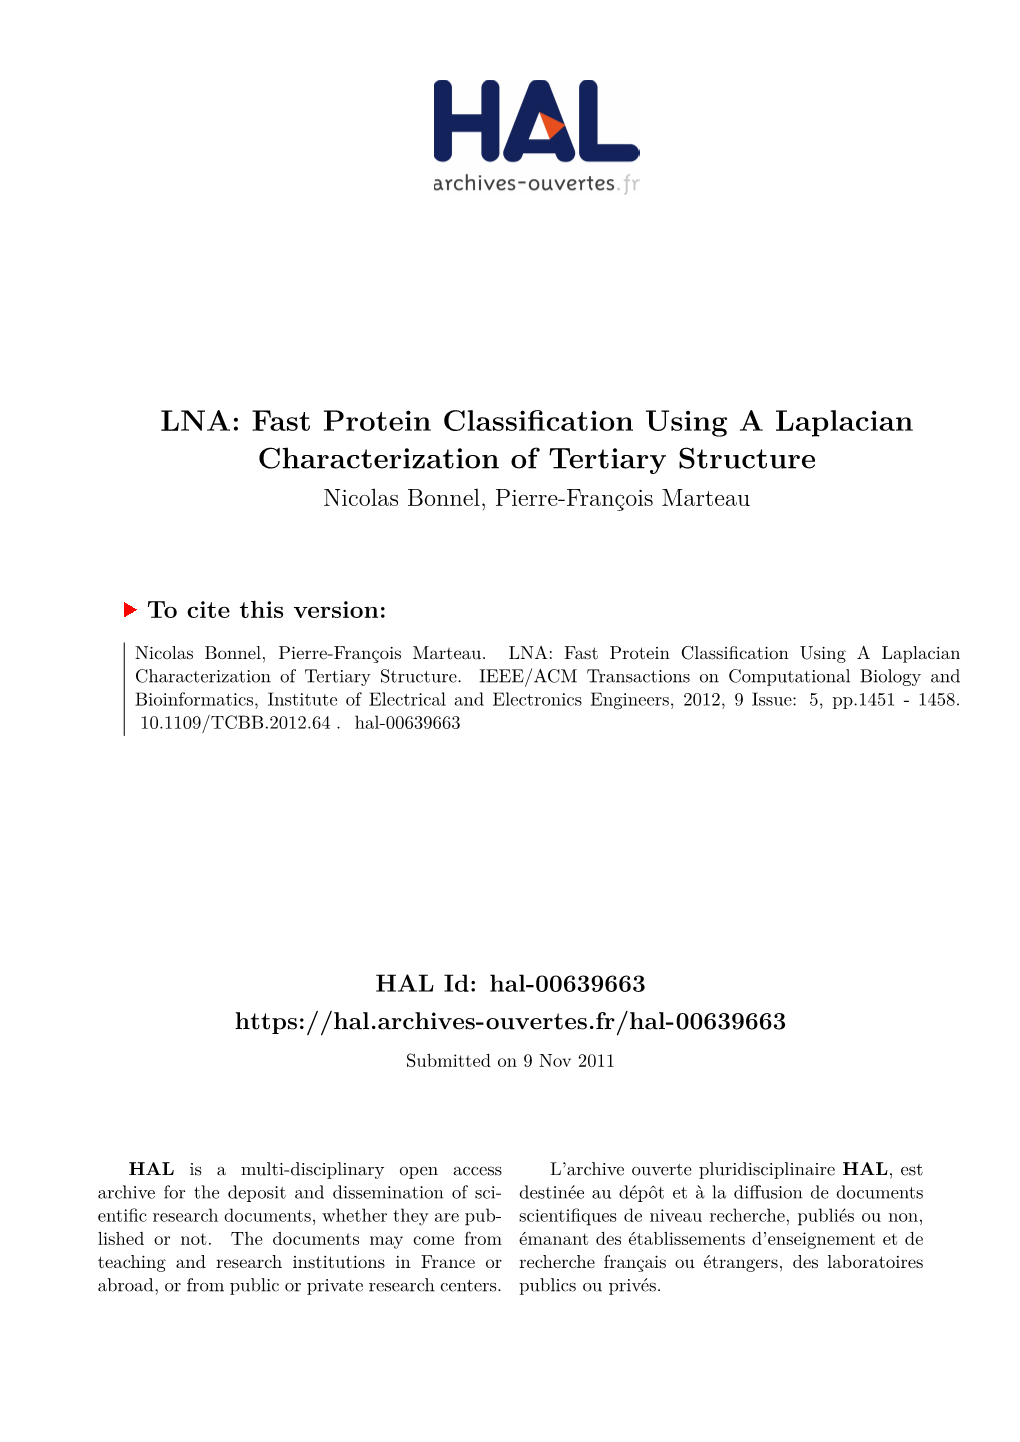 LNA: Fast Protein Classification Using a Laplacian Characterization of Tertiary Structure Nicolas Bonnel, Pierre-François Marteau